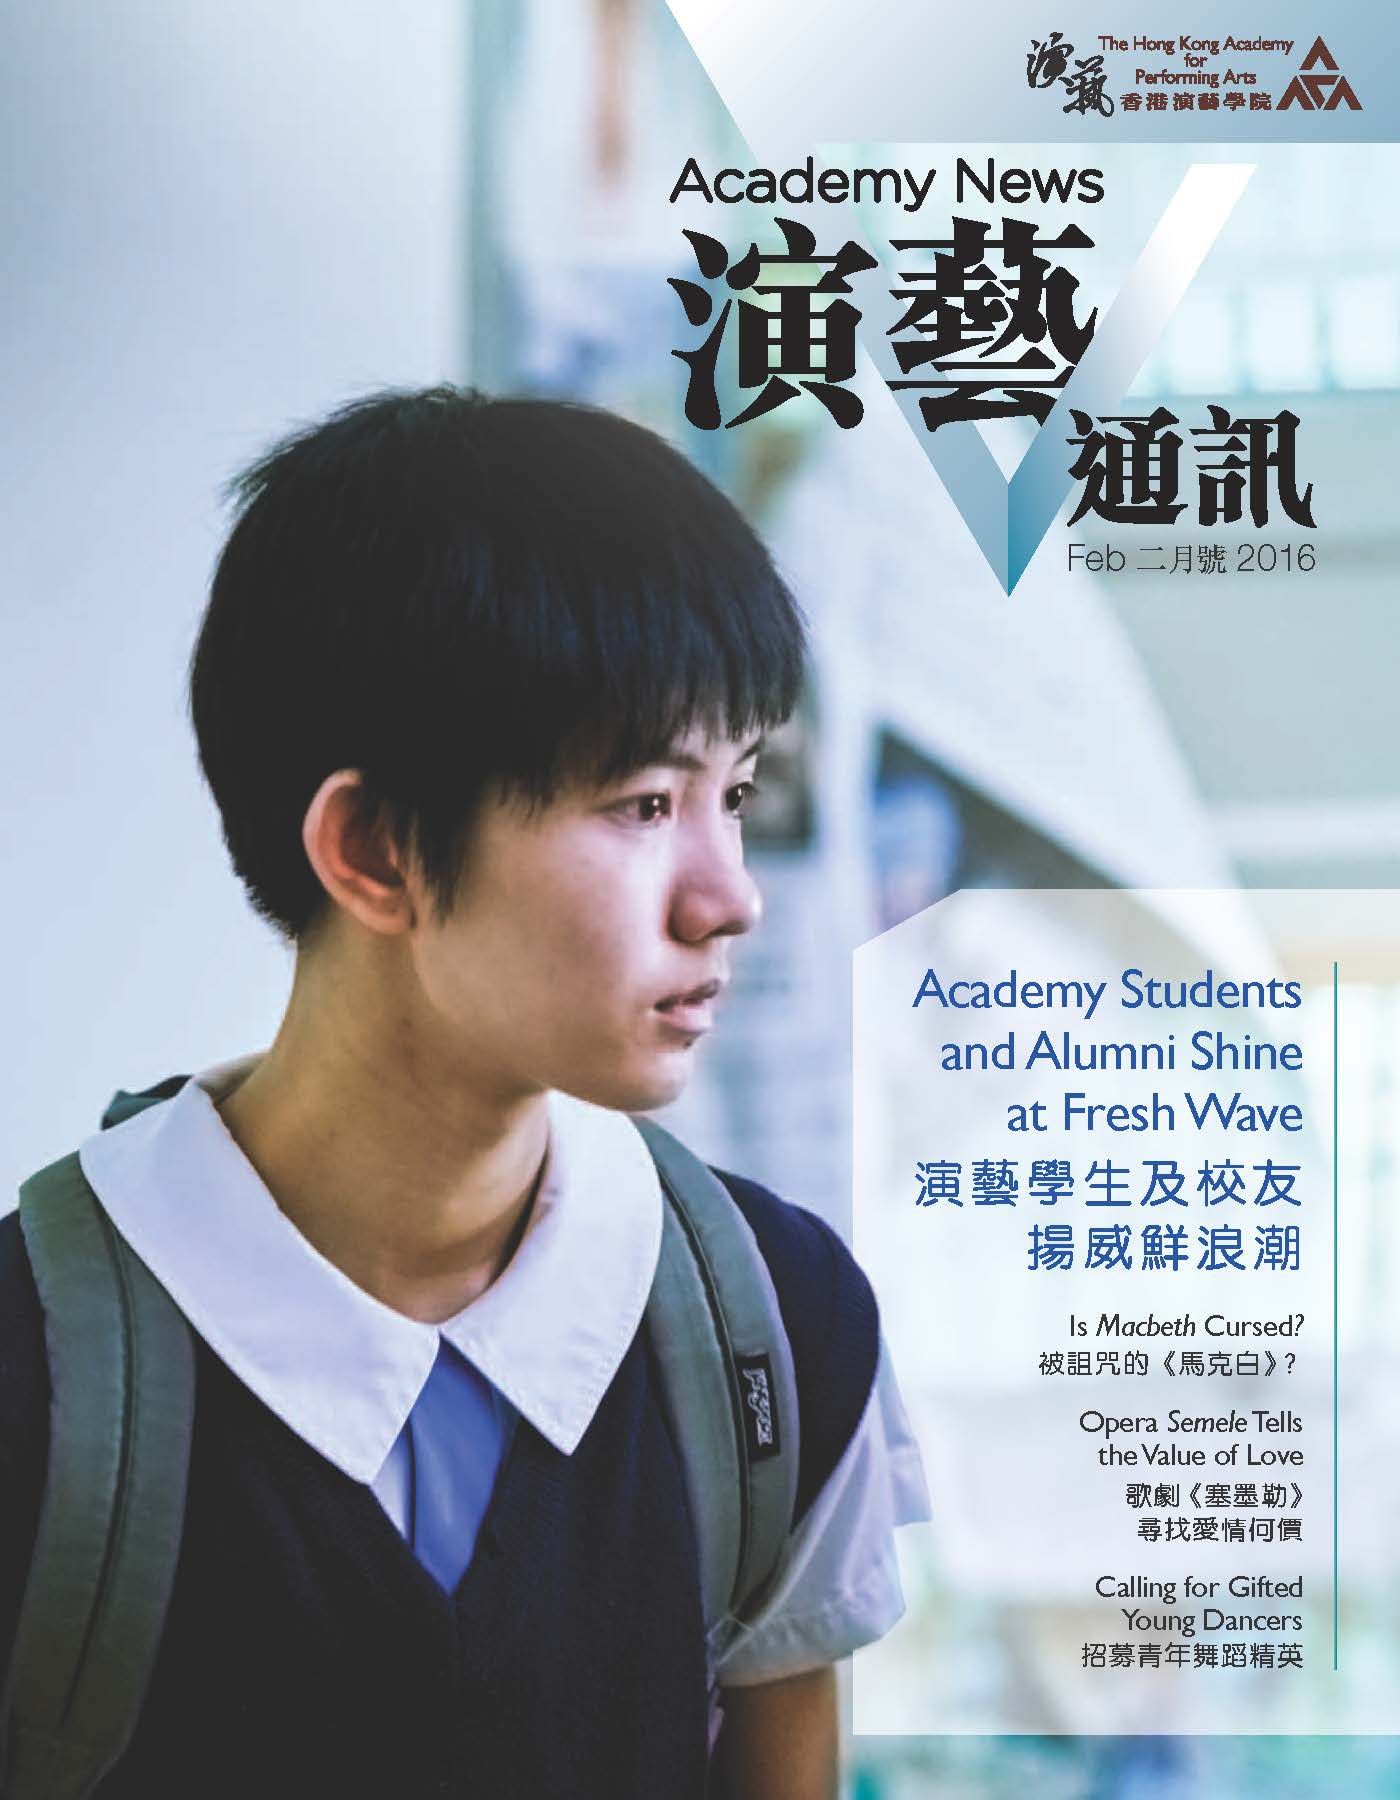 Academy News Feb 2016 issue